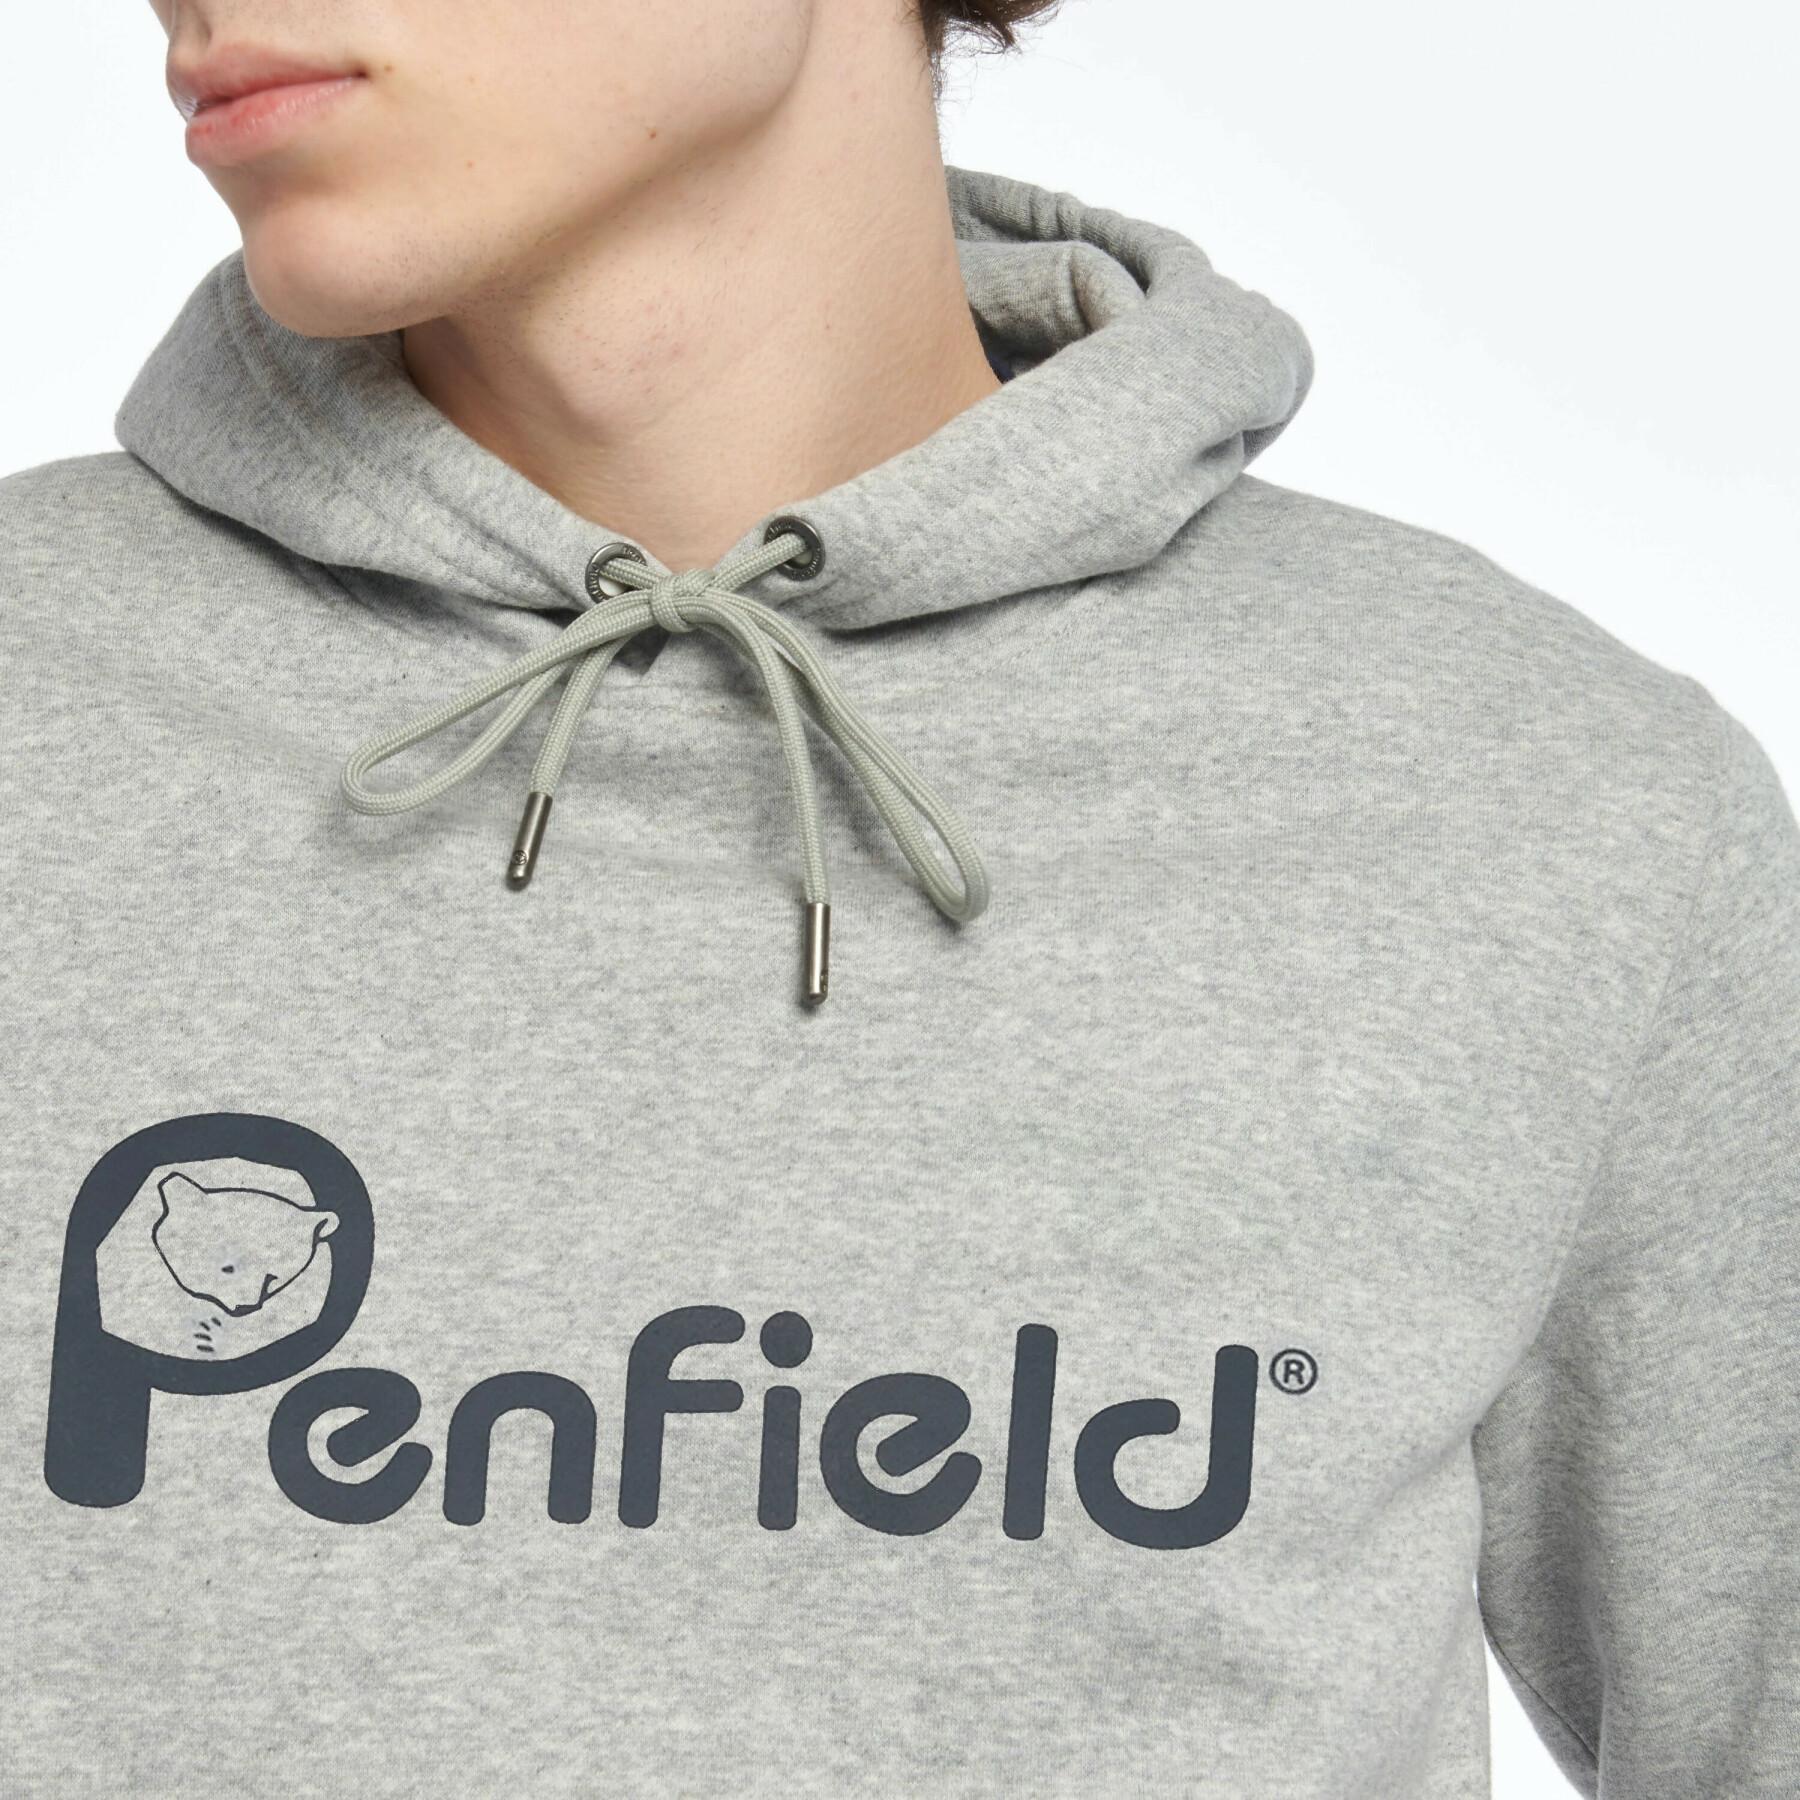 Sweatshirt med huva Penfield Bear Chest Print